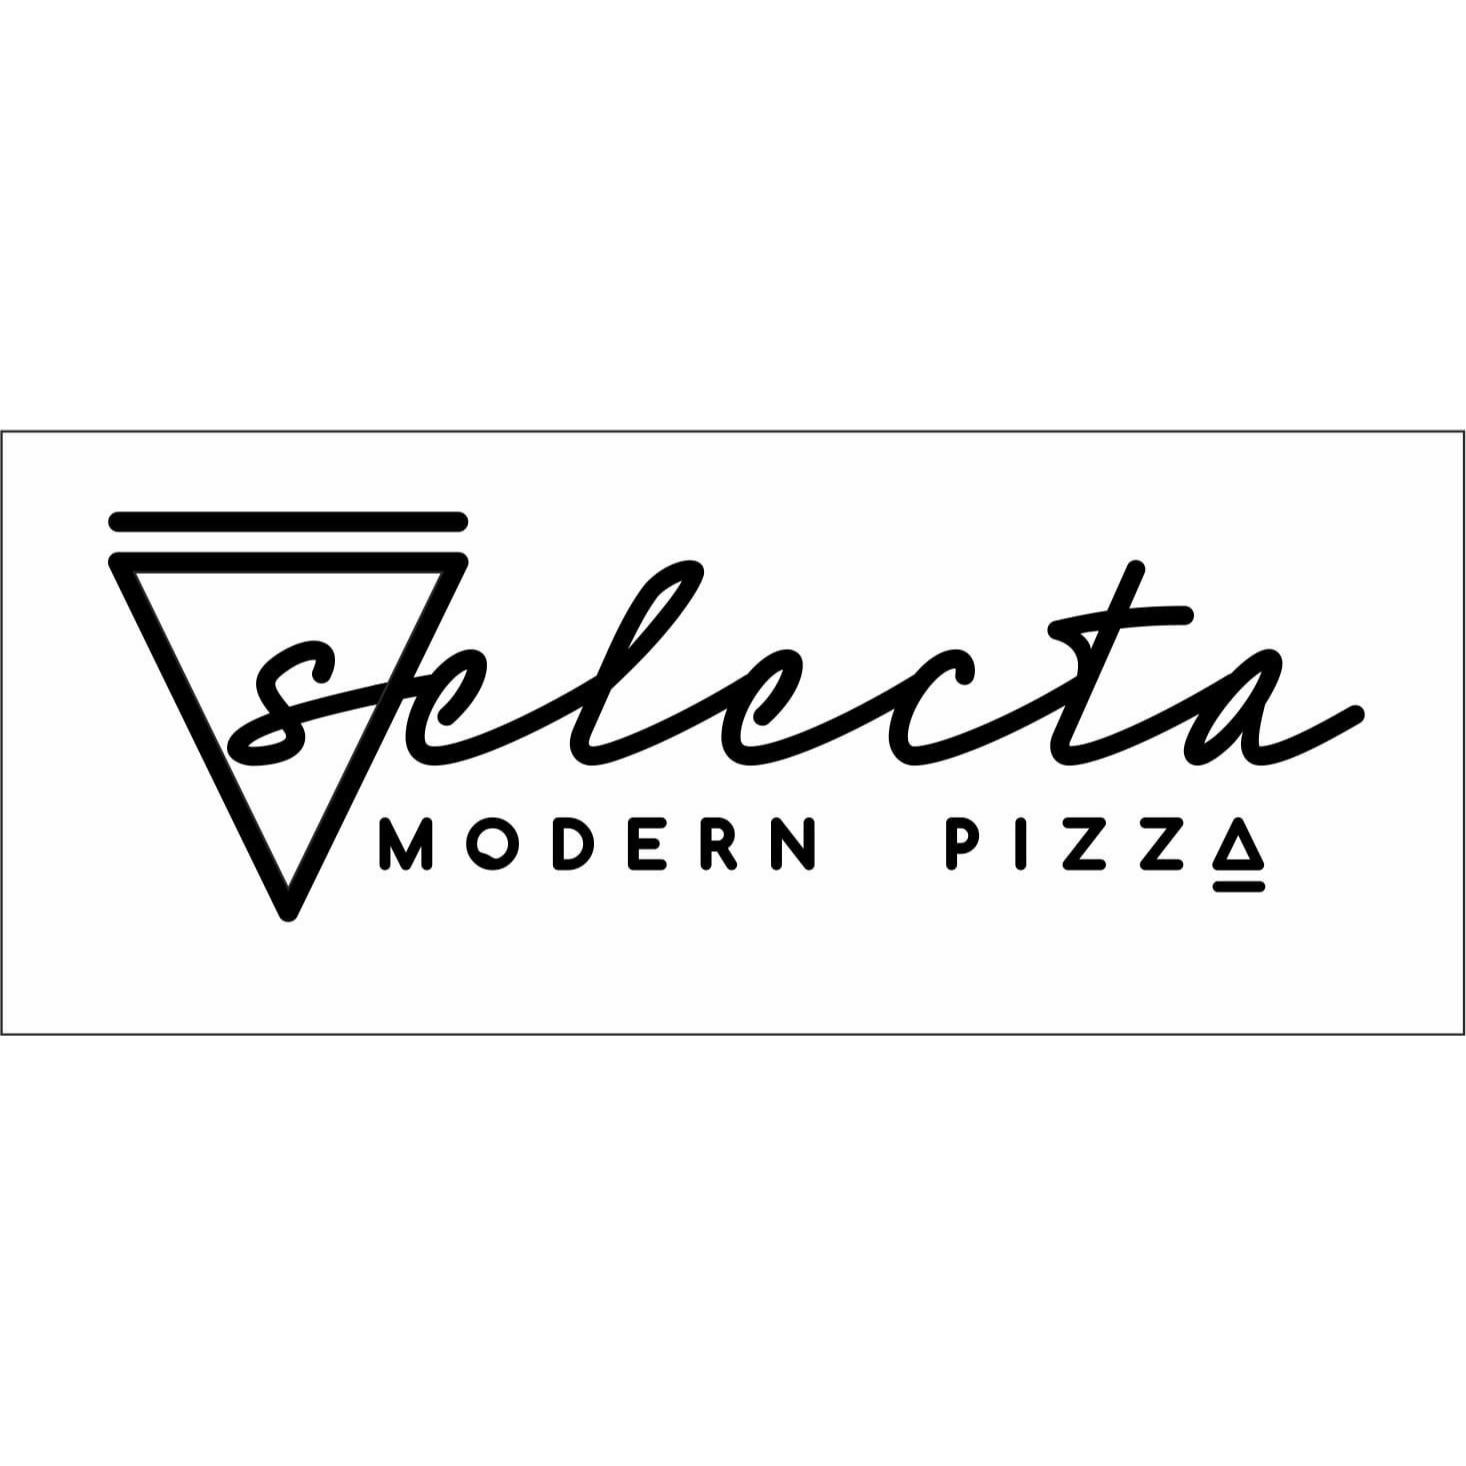 Selecta Modern Pizza in Berlin